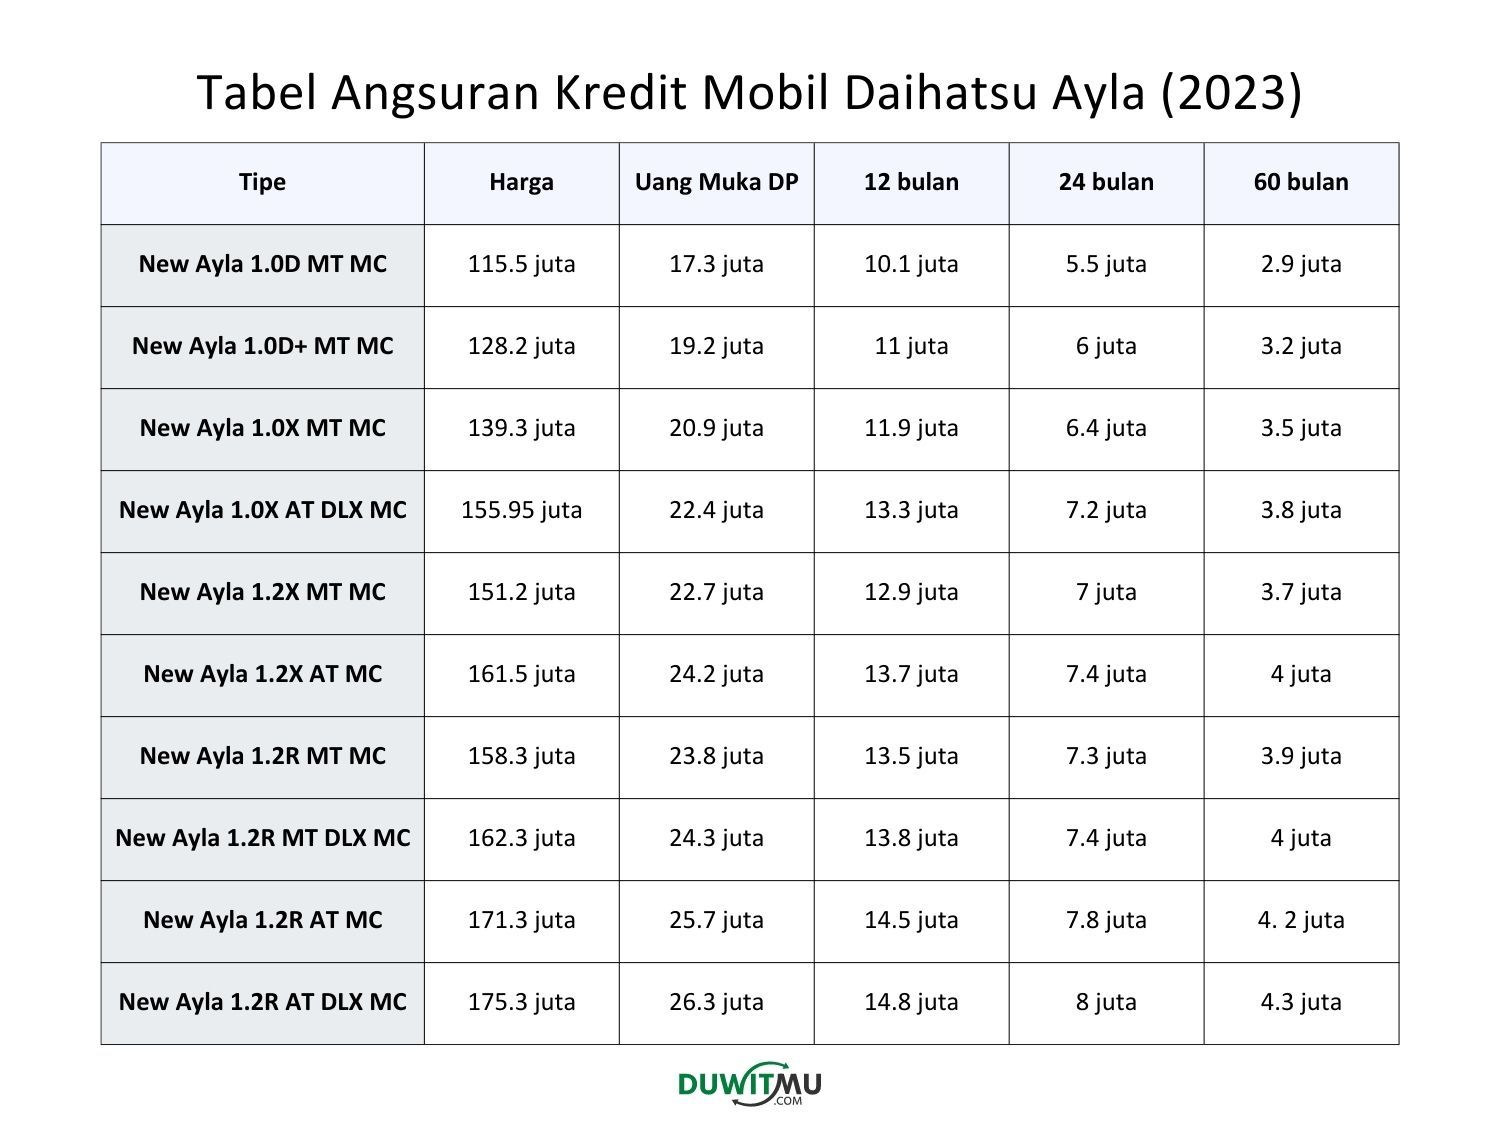 Tabel Angsuran Daihatsu New Ayla (2023)